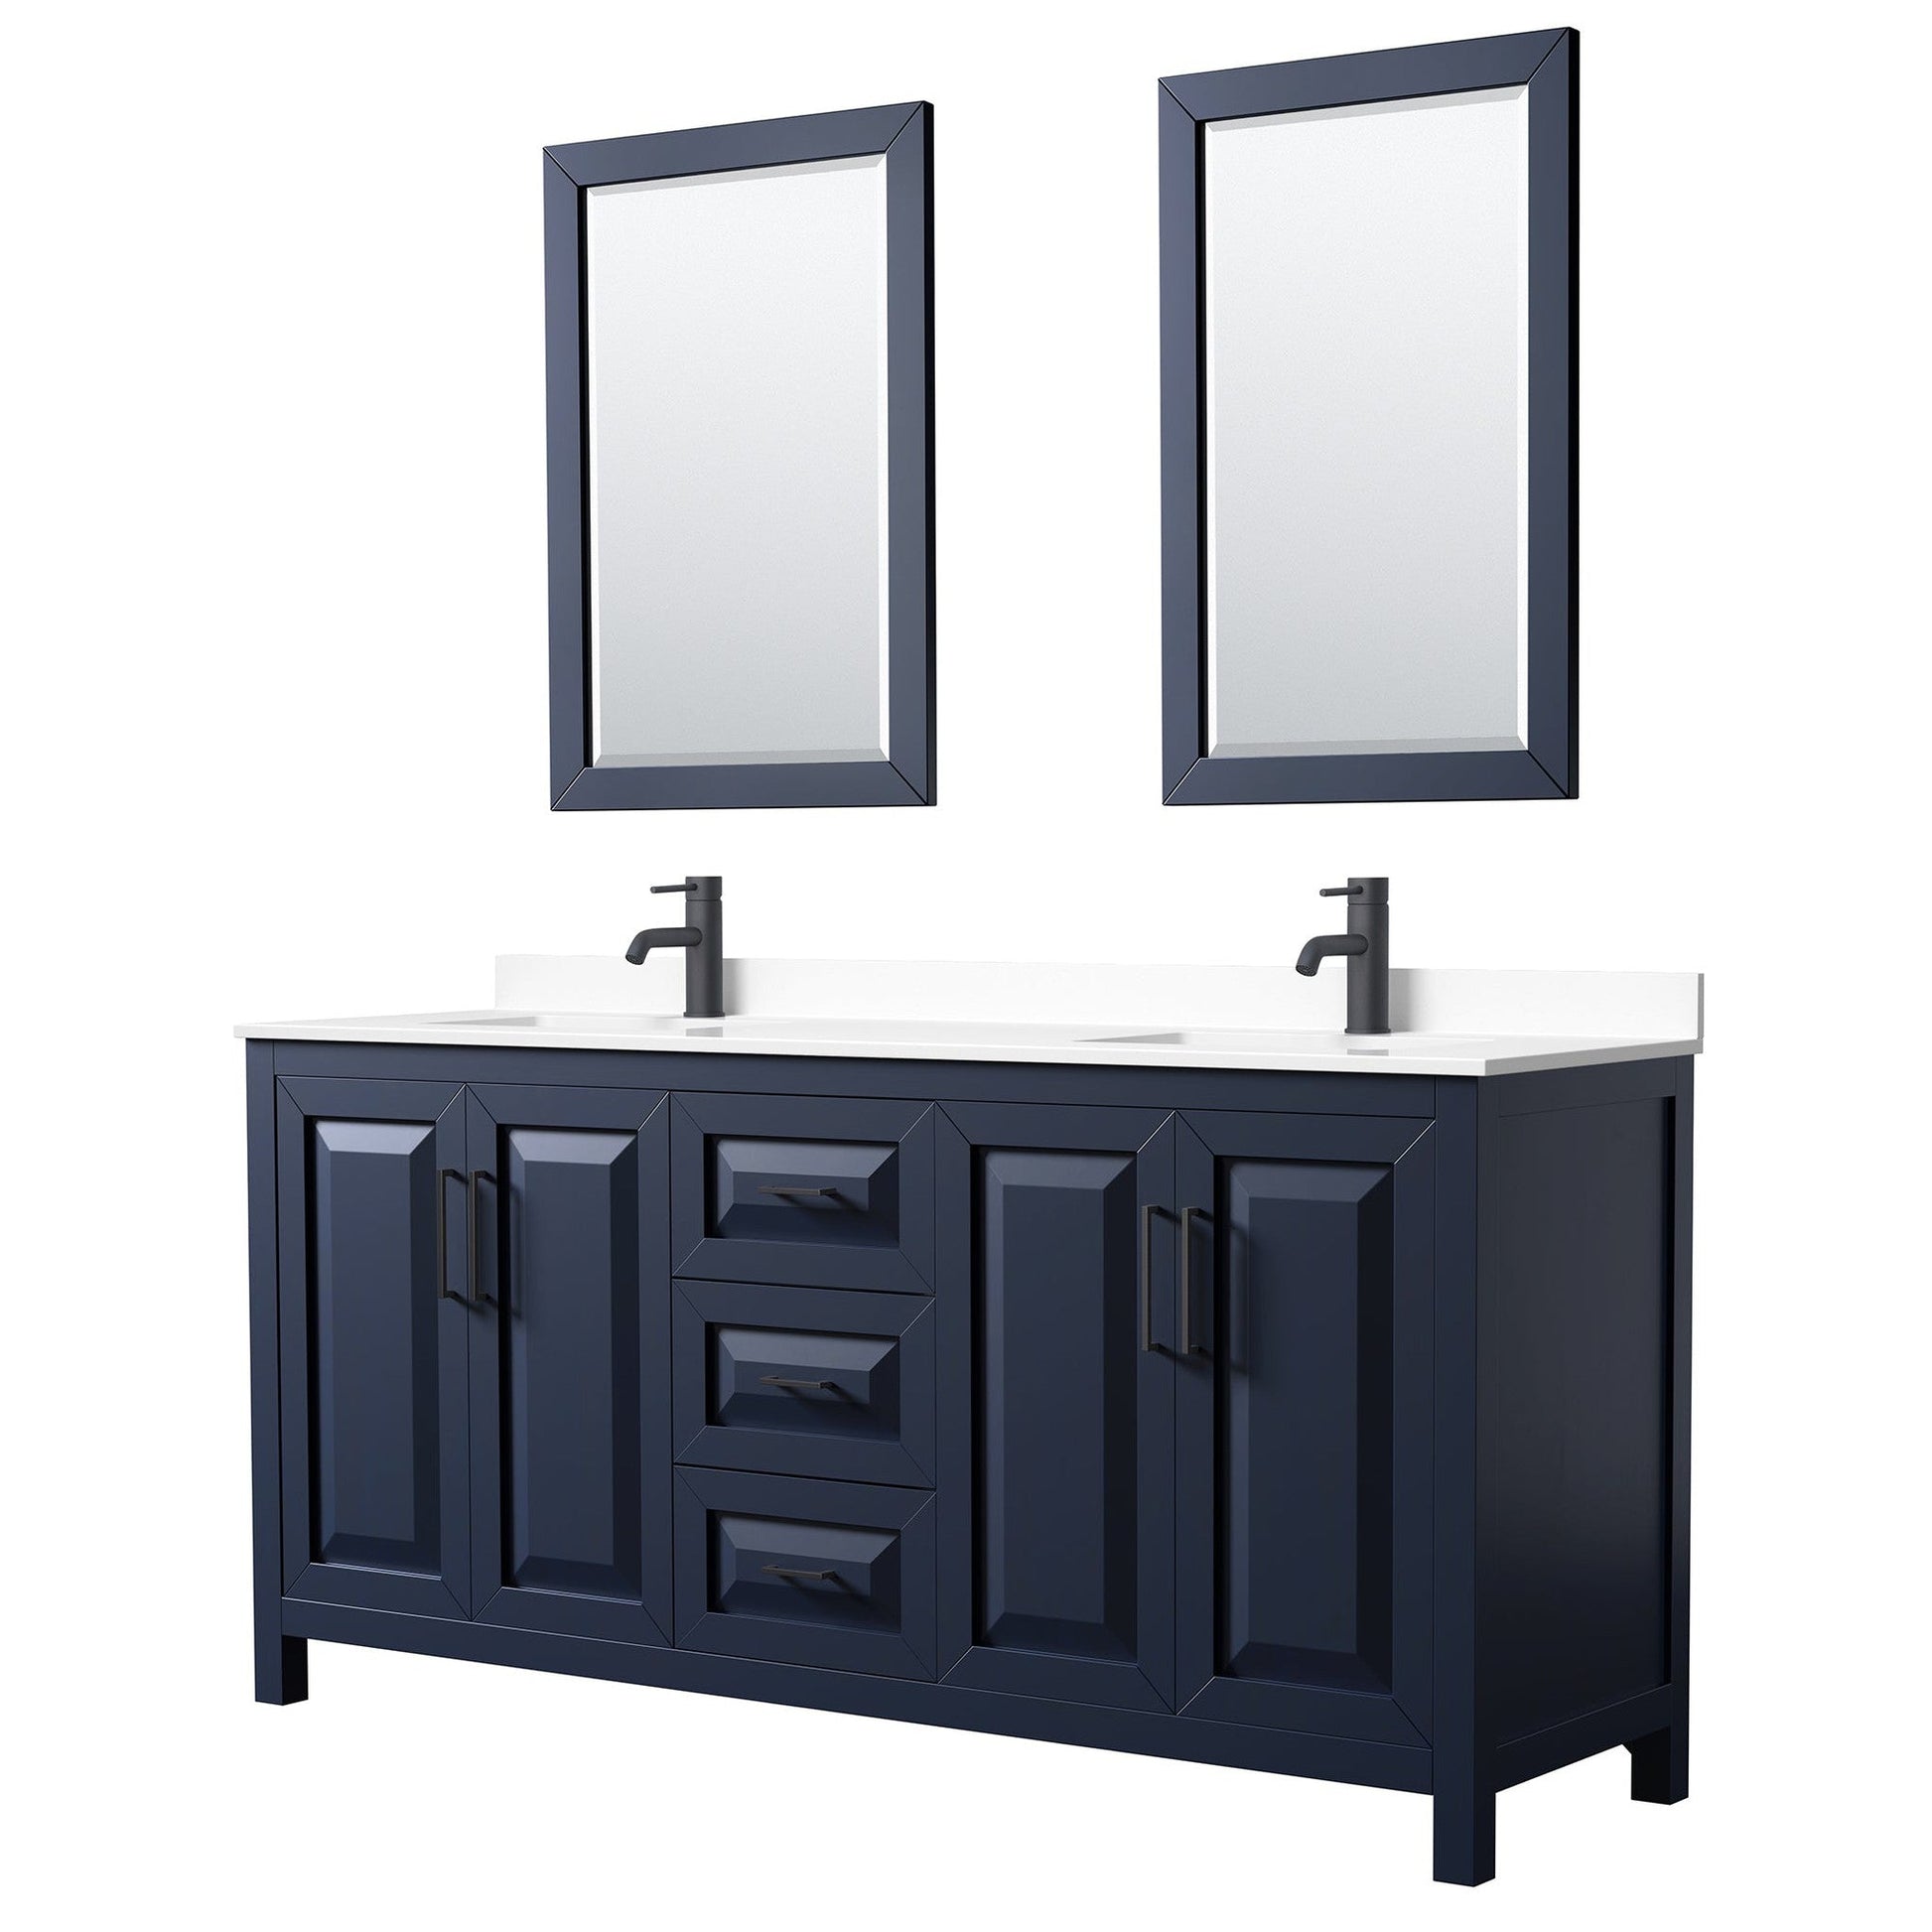 Daria 72" Double Bathroom Vanity in Dark Blue, White Cultured Marble Countertop, Undermount Square Sinks, Matte Black Trim, 24" Mirrors